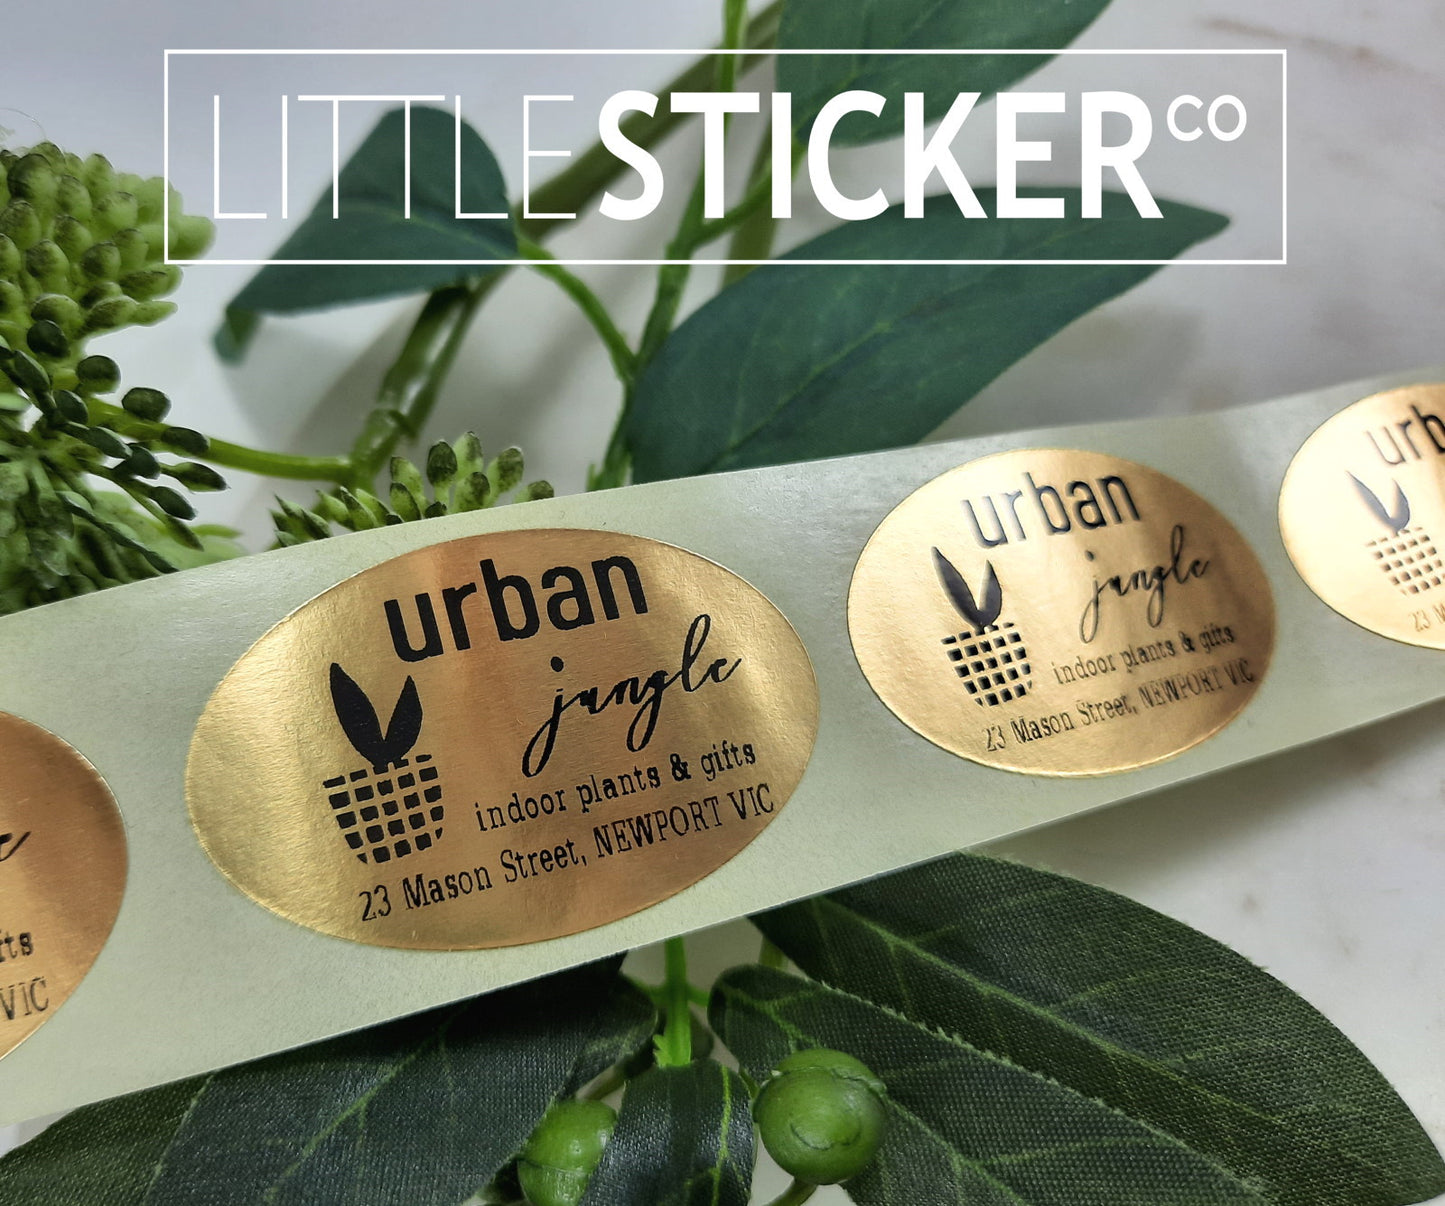 Gold custom stickers